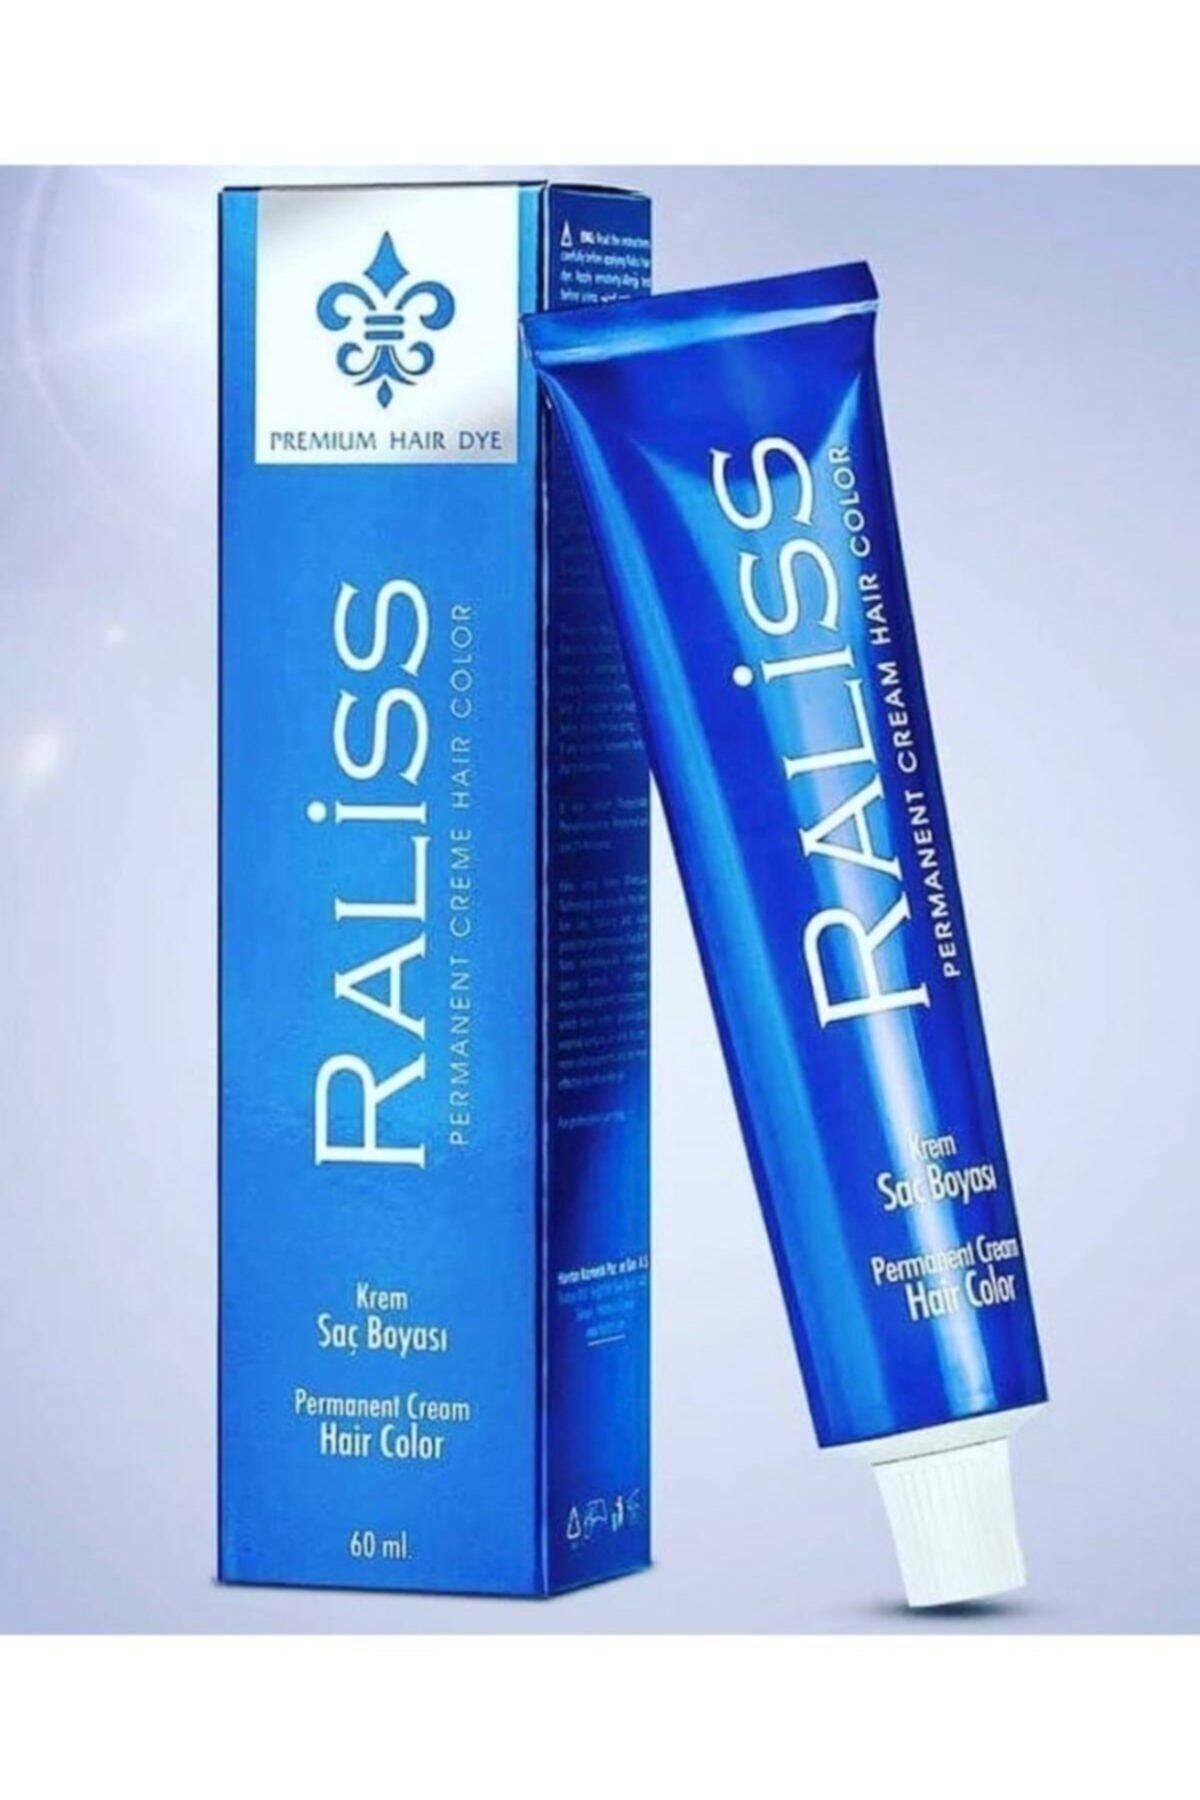 Raliss Saç Boyası 11.0s Extra Açıcı Beyaz